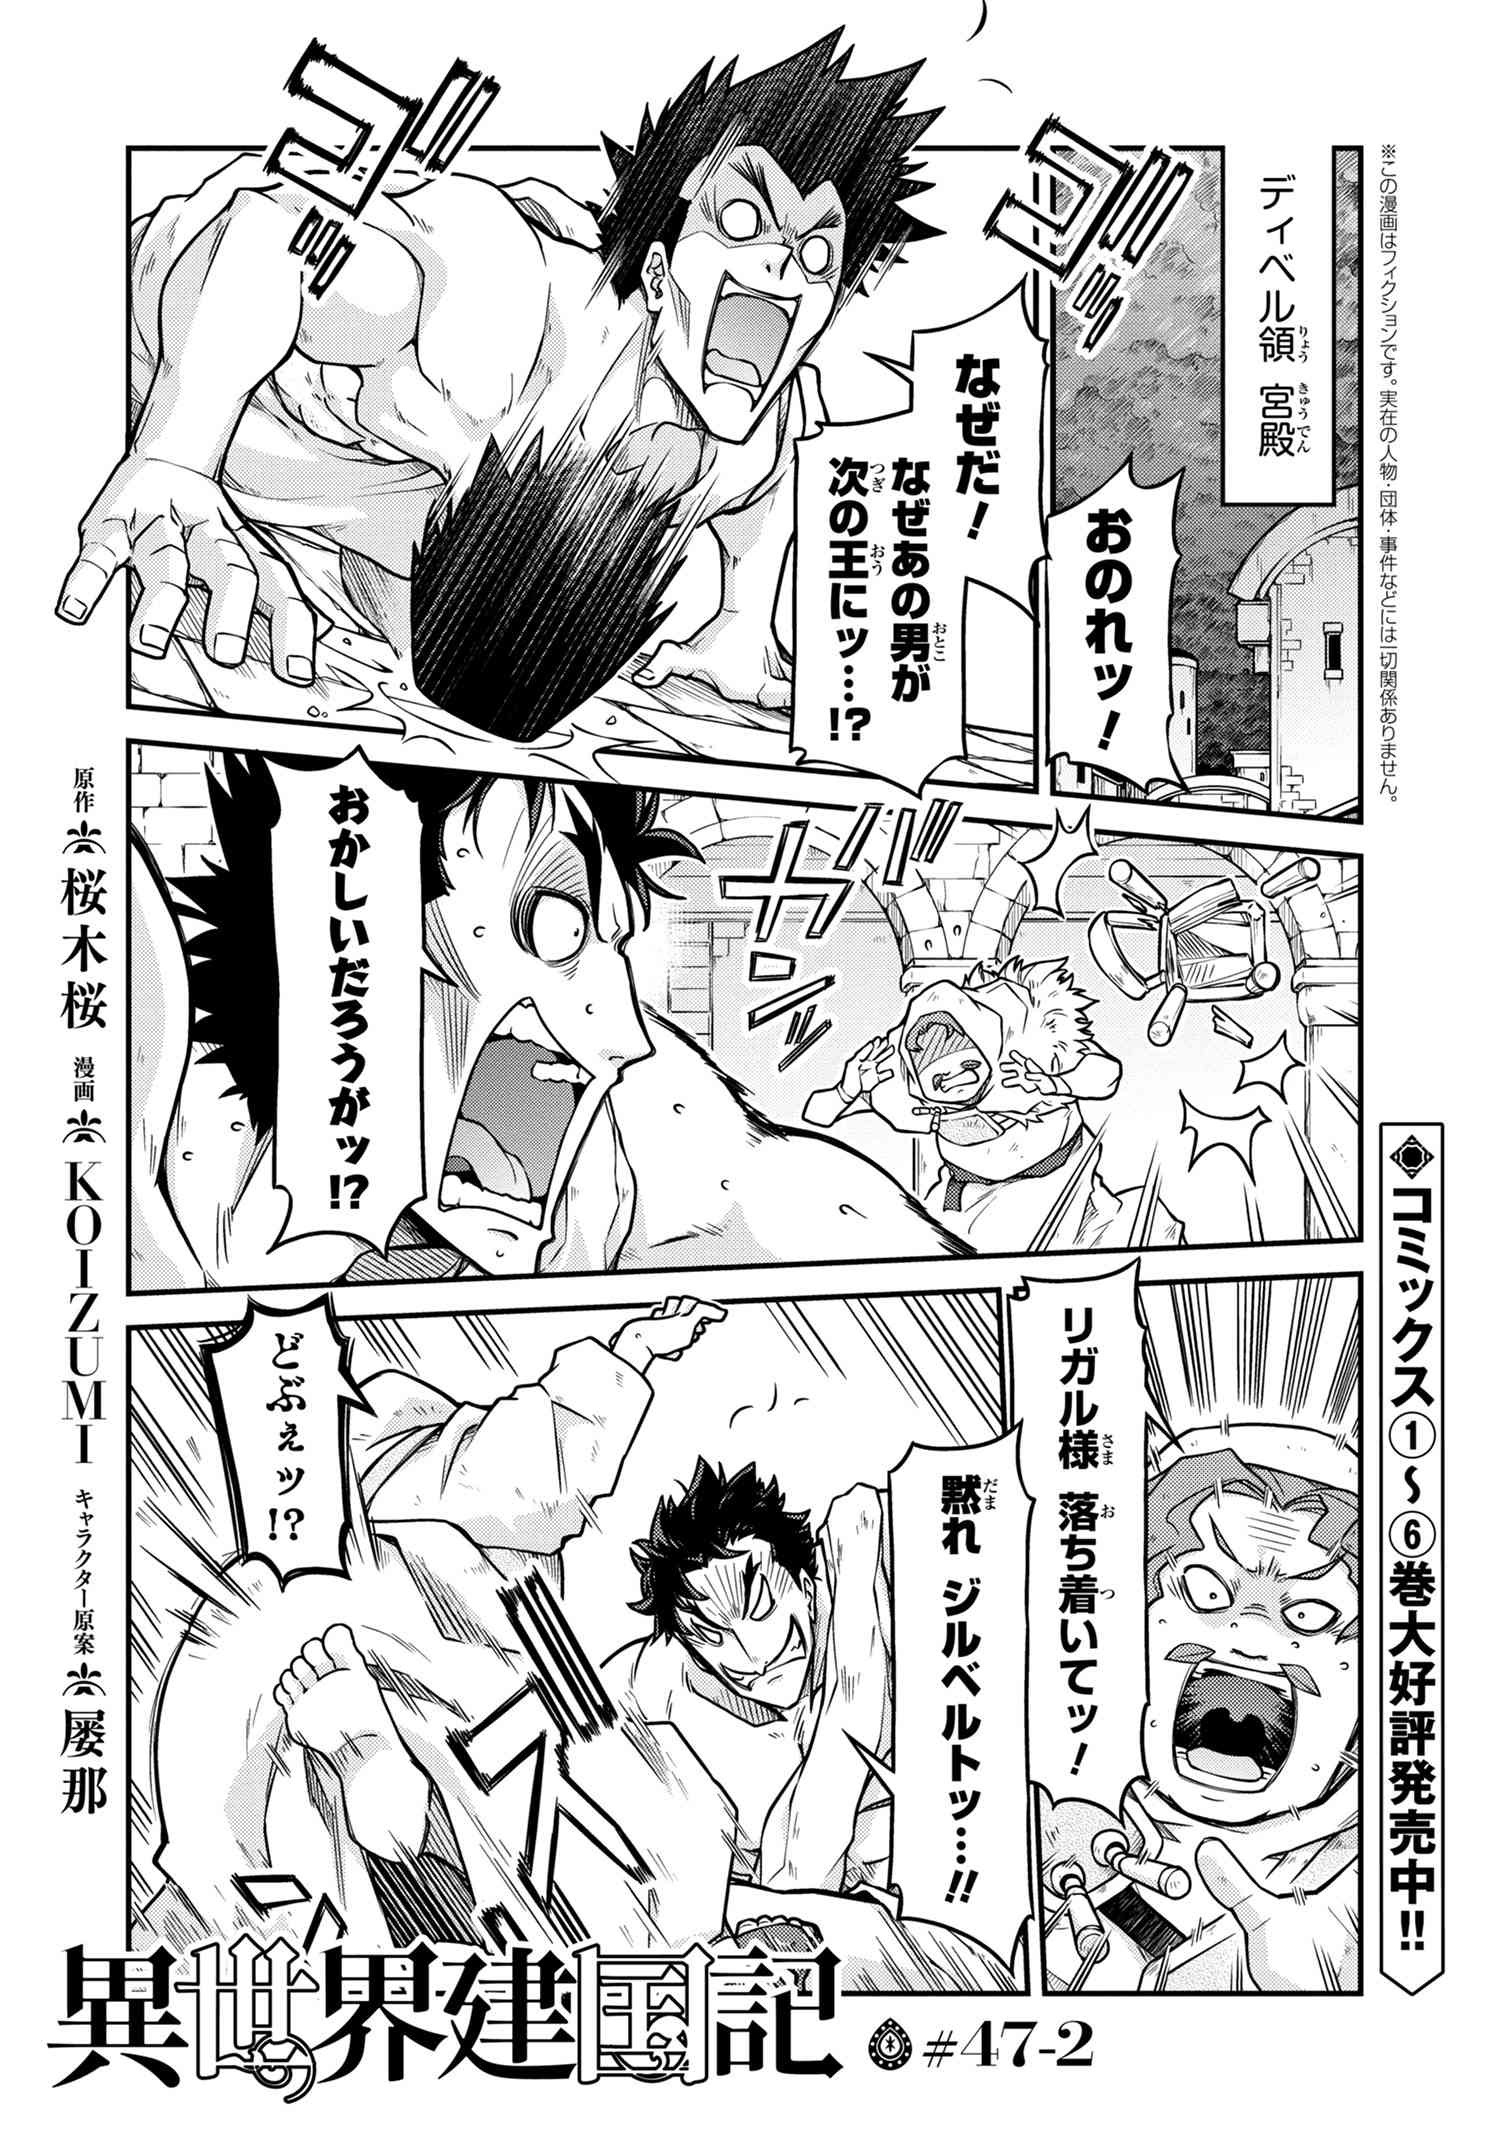 Isekai Kenkokuki - Chapter 47-2 - Page 1